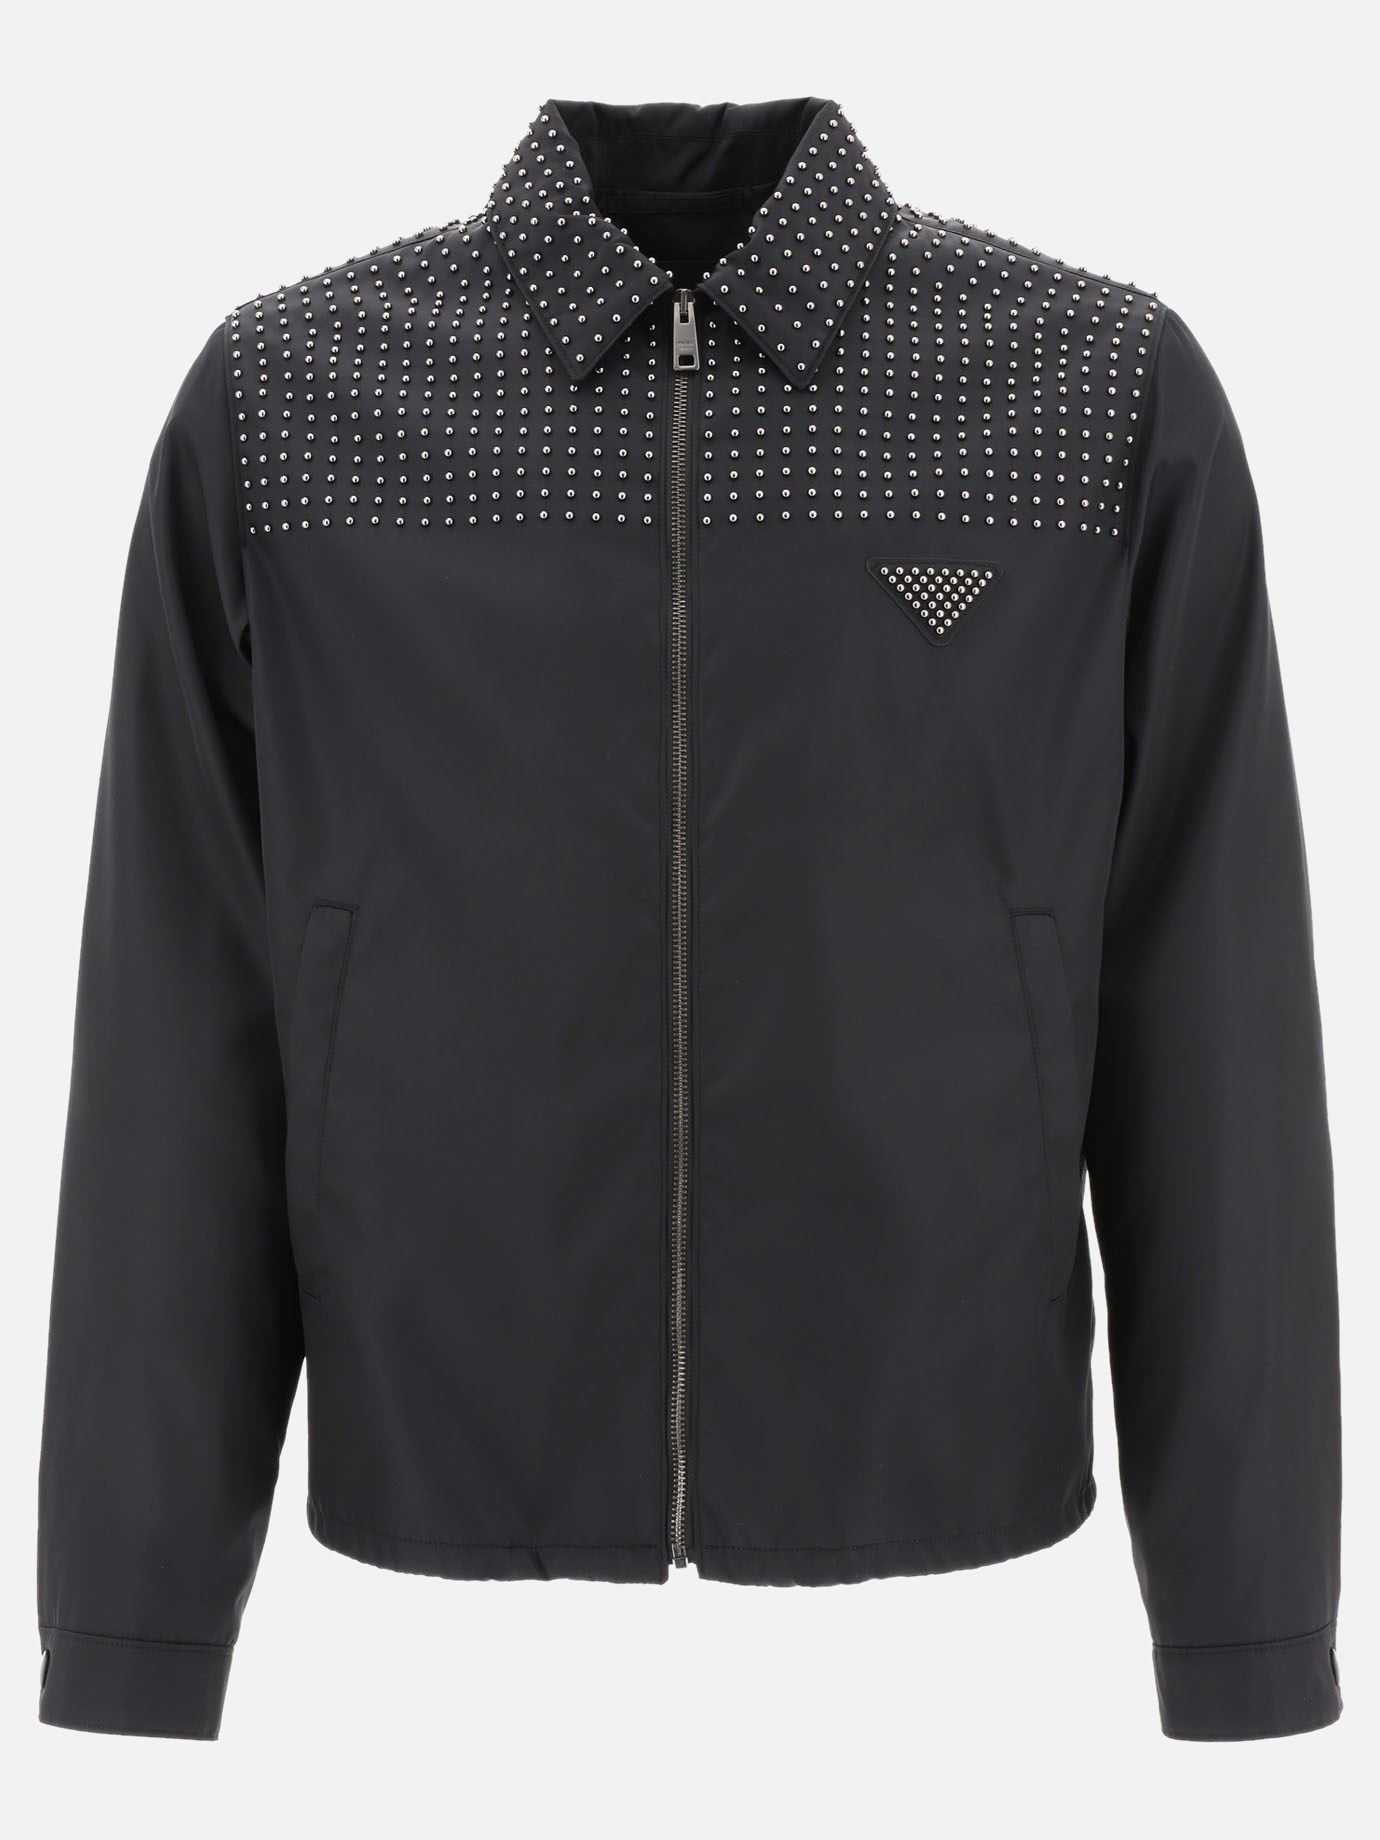  Re-Nylon  studded jacket by Prada